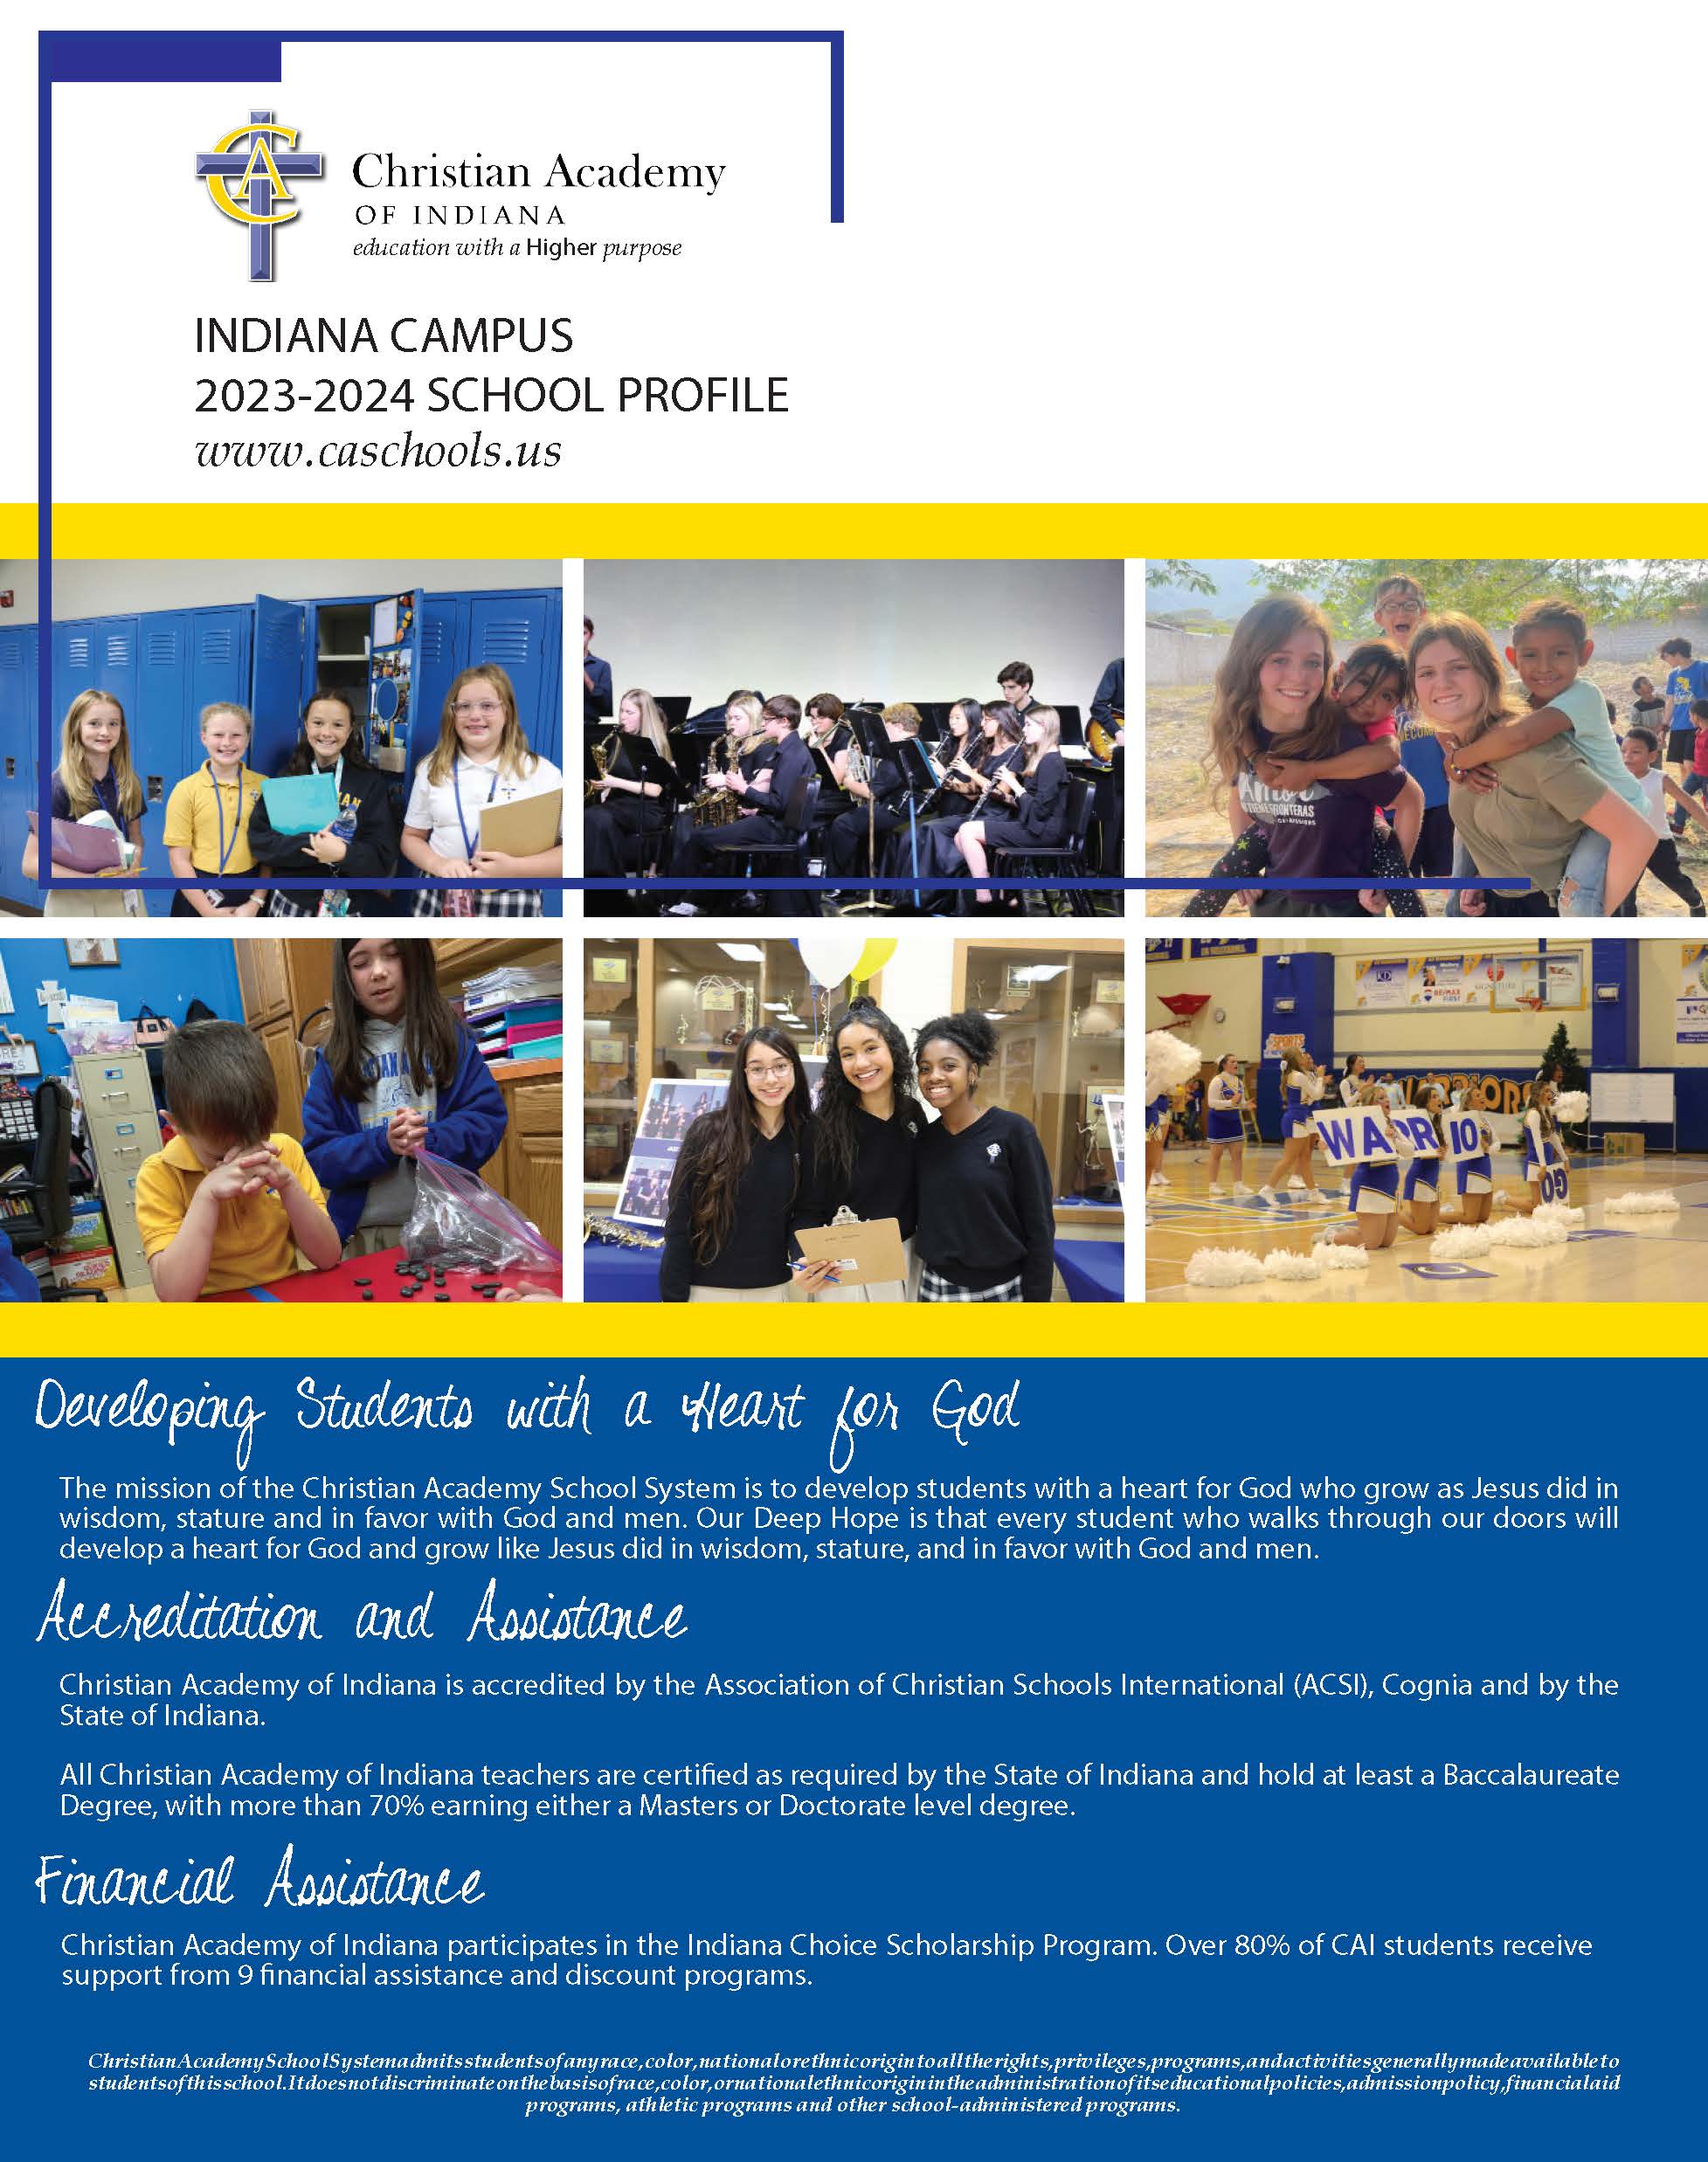 Christian Academy School System |<br />
Christian Academy of Indiana | School Profile | 2023-2024